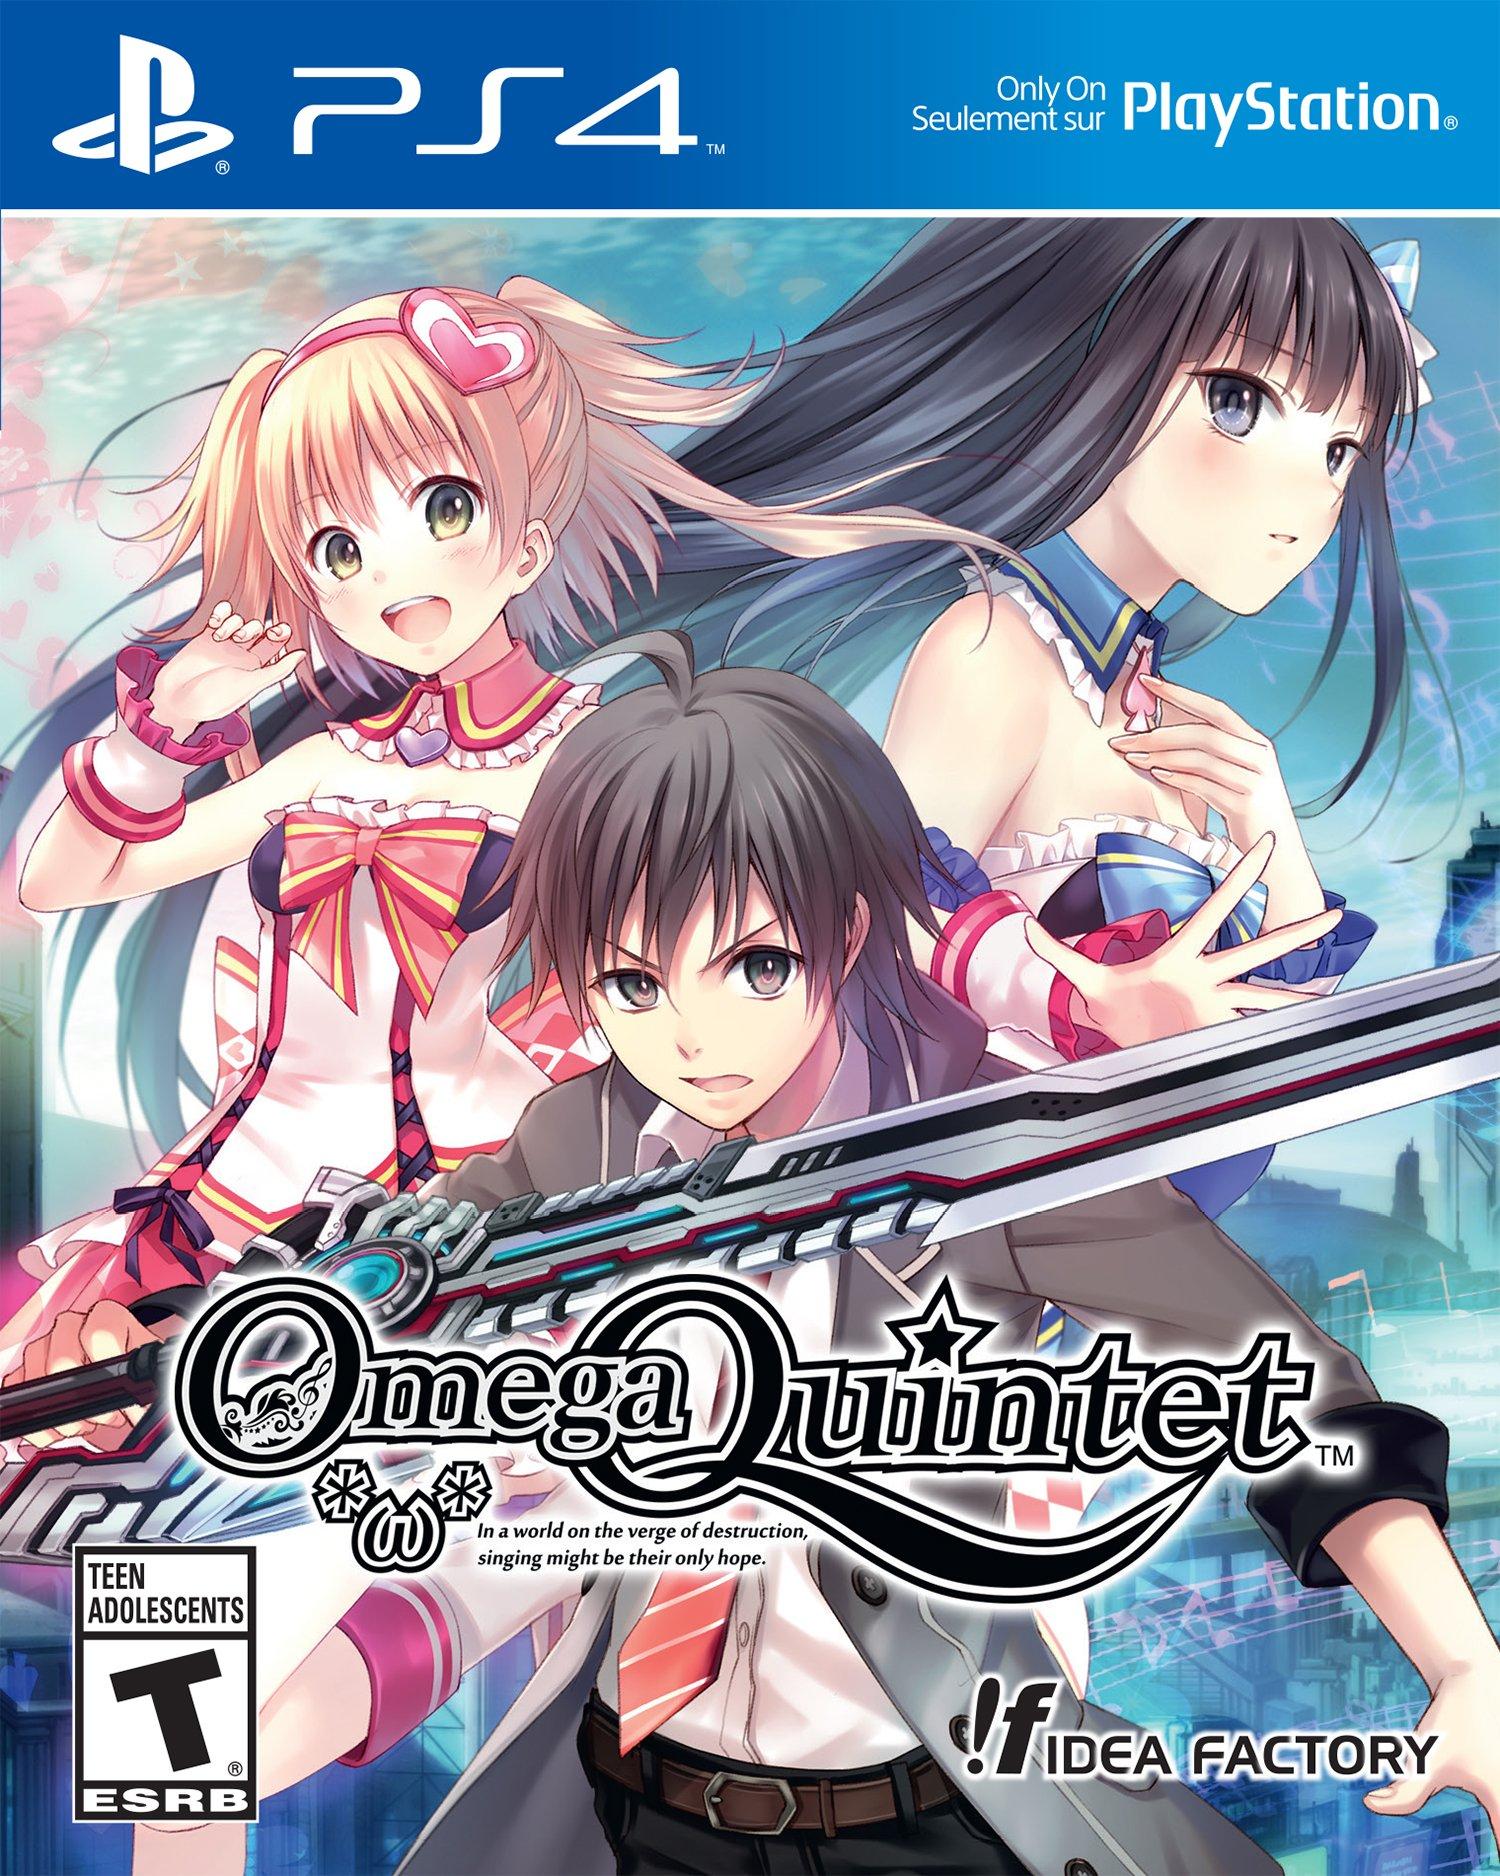 Og detaljer Mutton Omega Quintet - PlayStation 4 | PlayStation 4 | GameStop